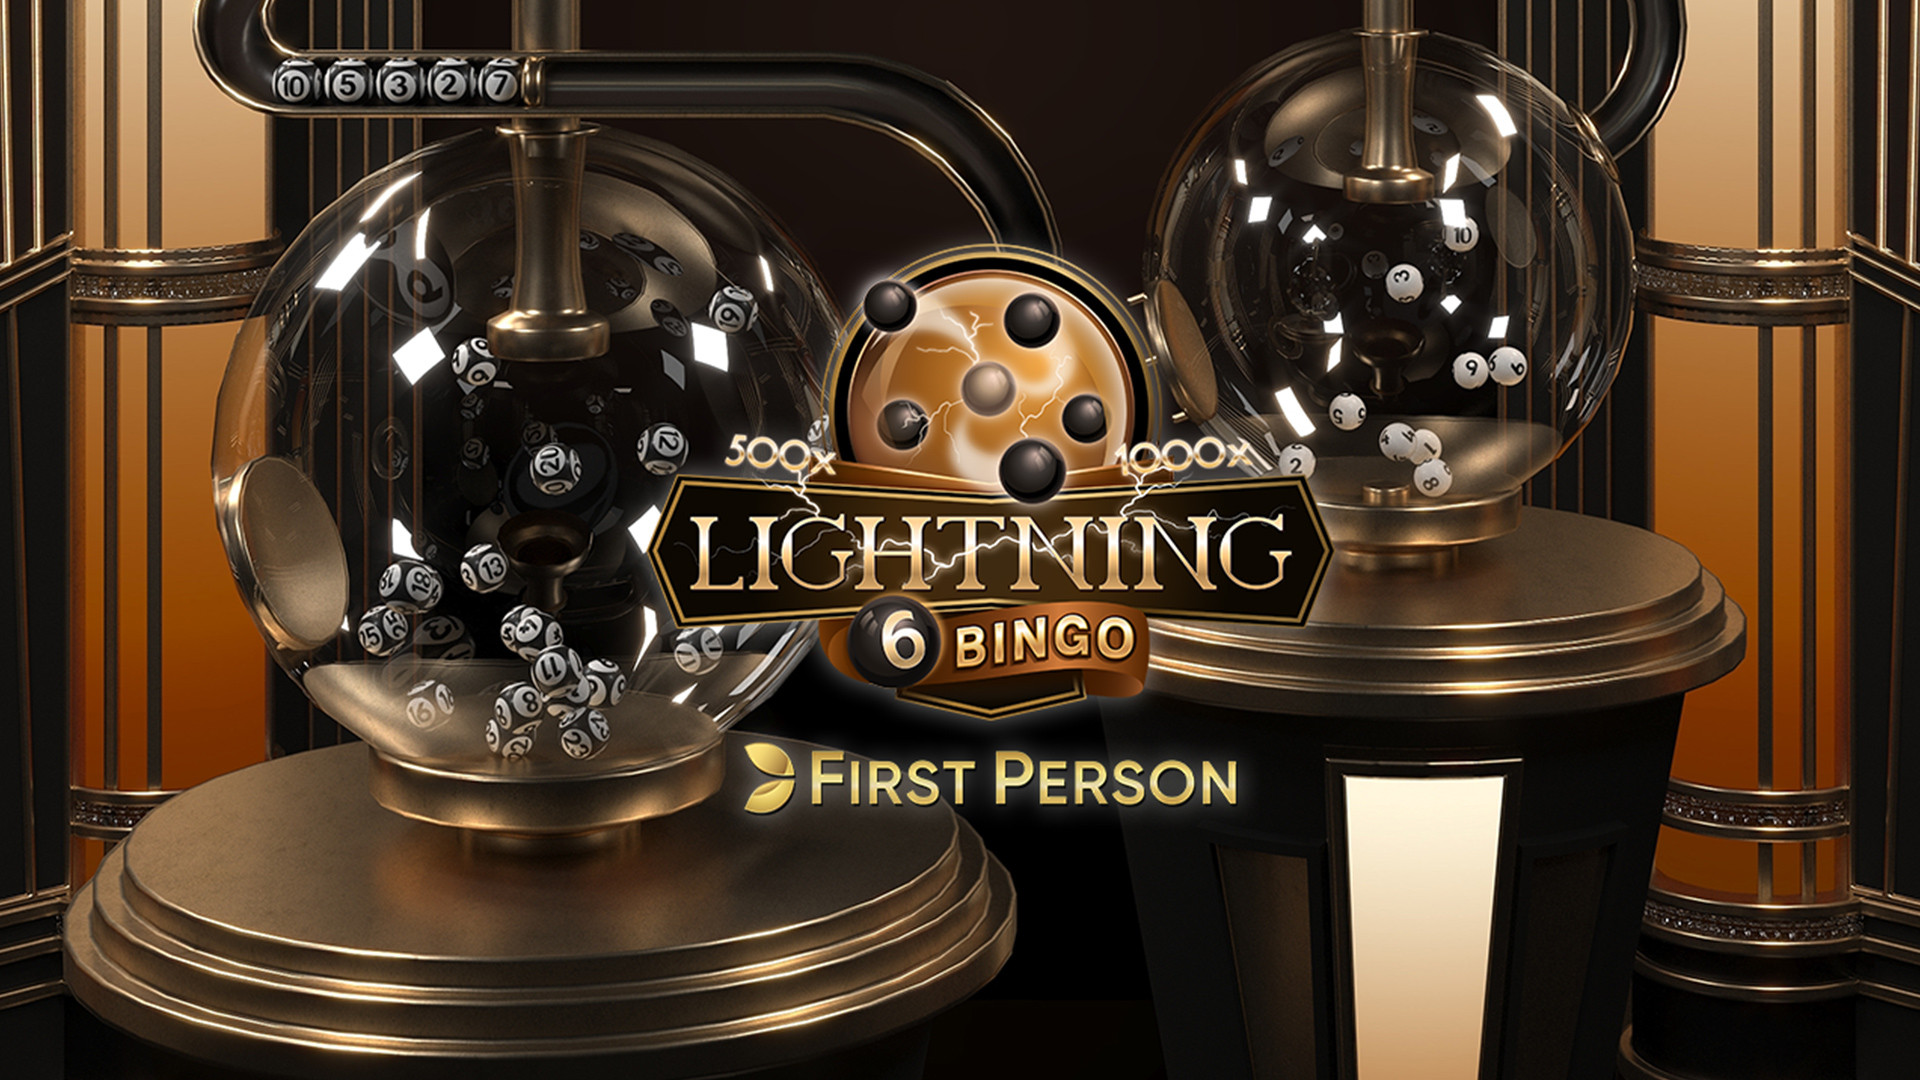 First Person Lightning 6 Bingo